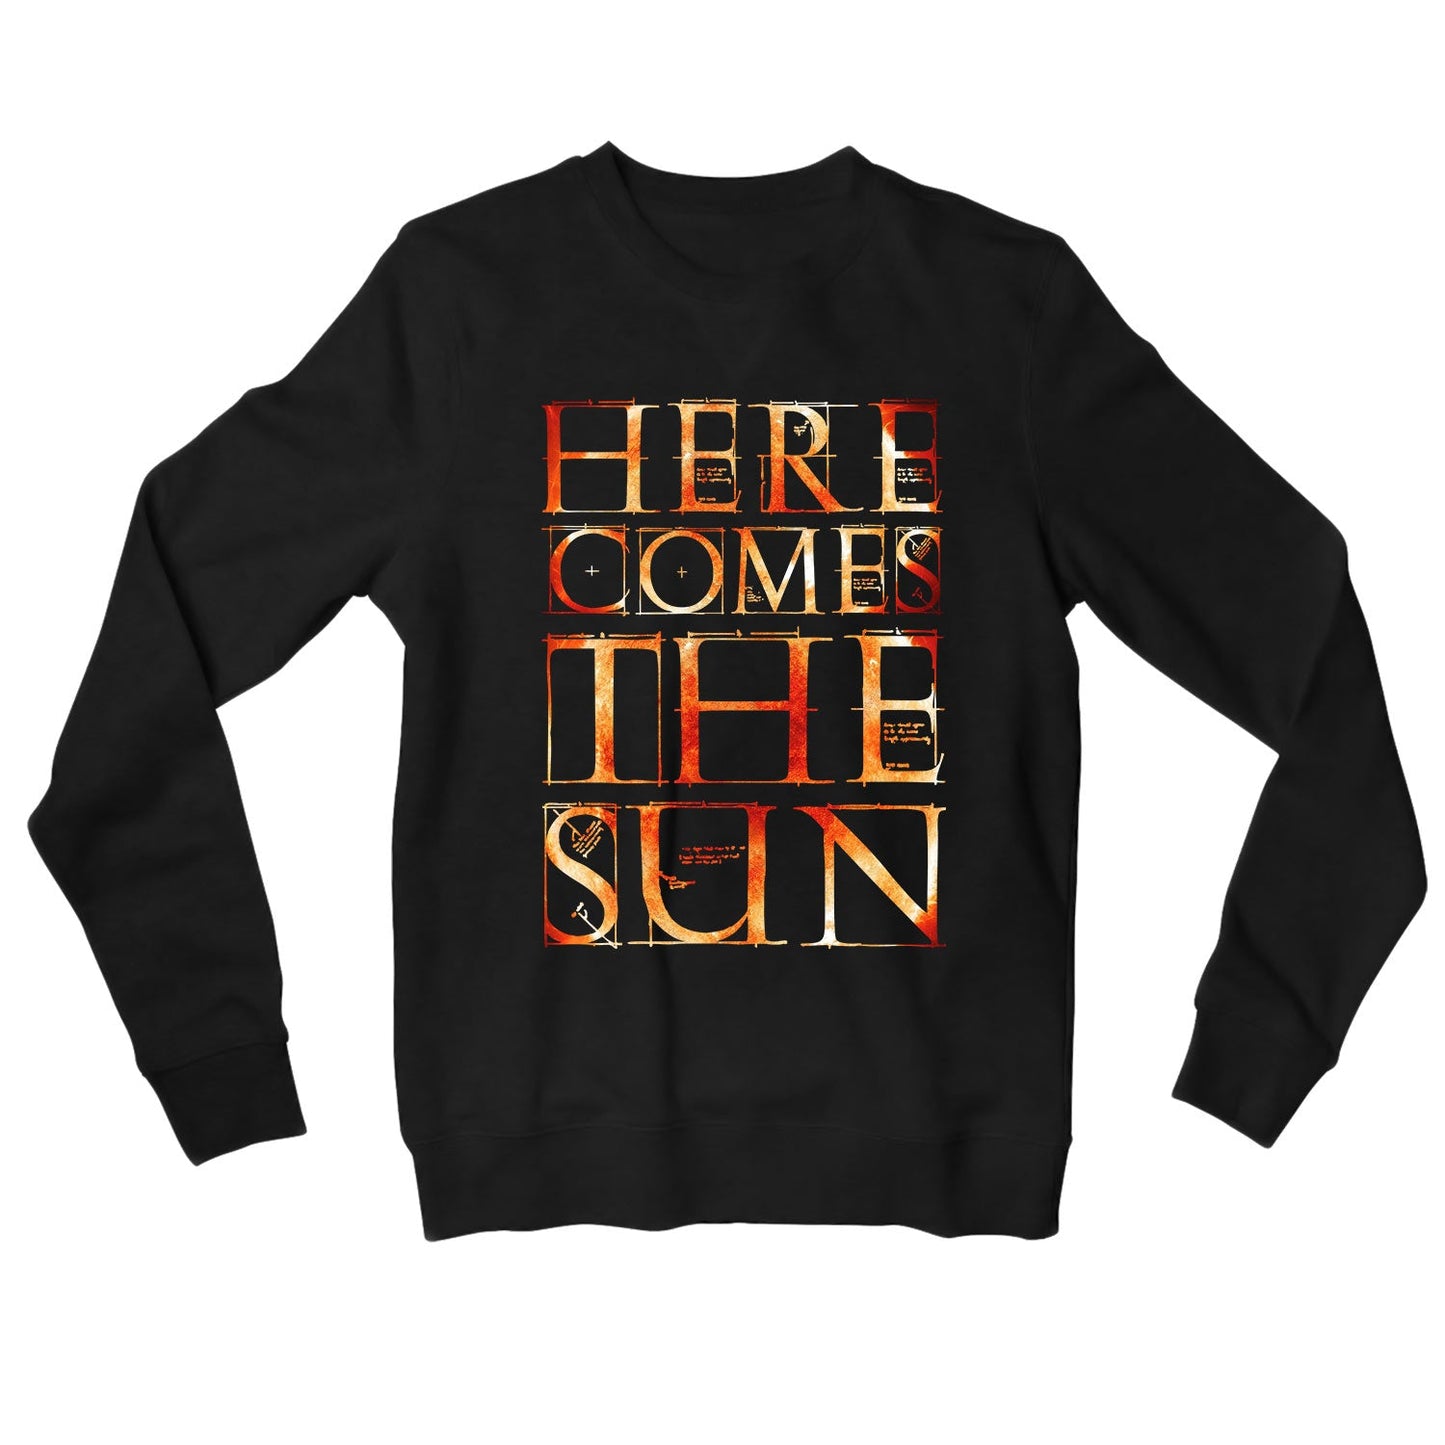 The Beatles Sweatshirt - Here Comes The Sun Sweatshirt The Banyan Tee TBT